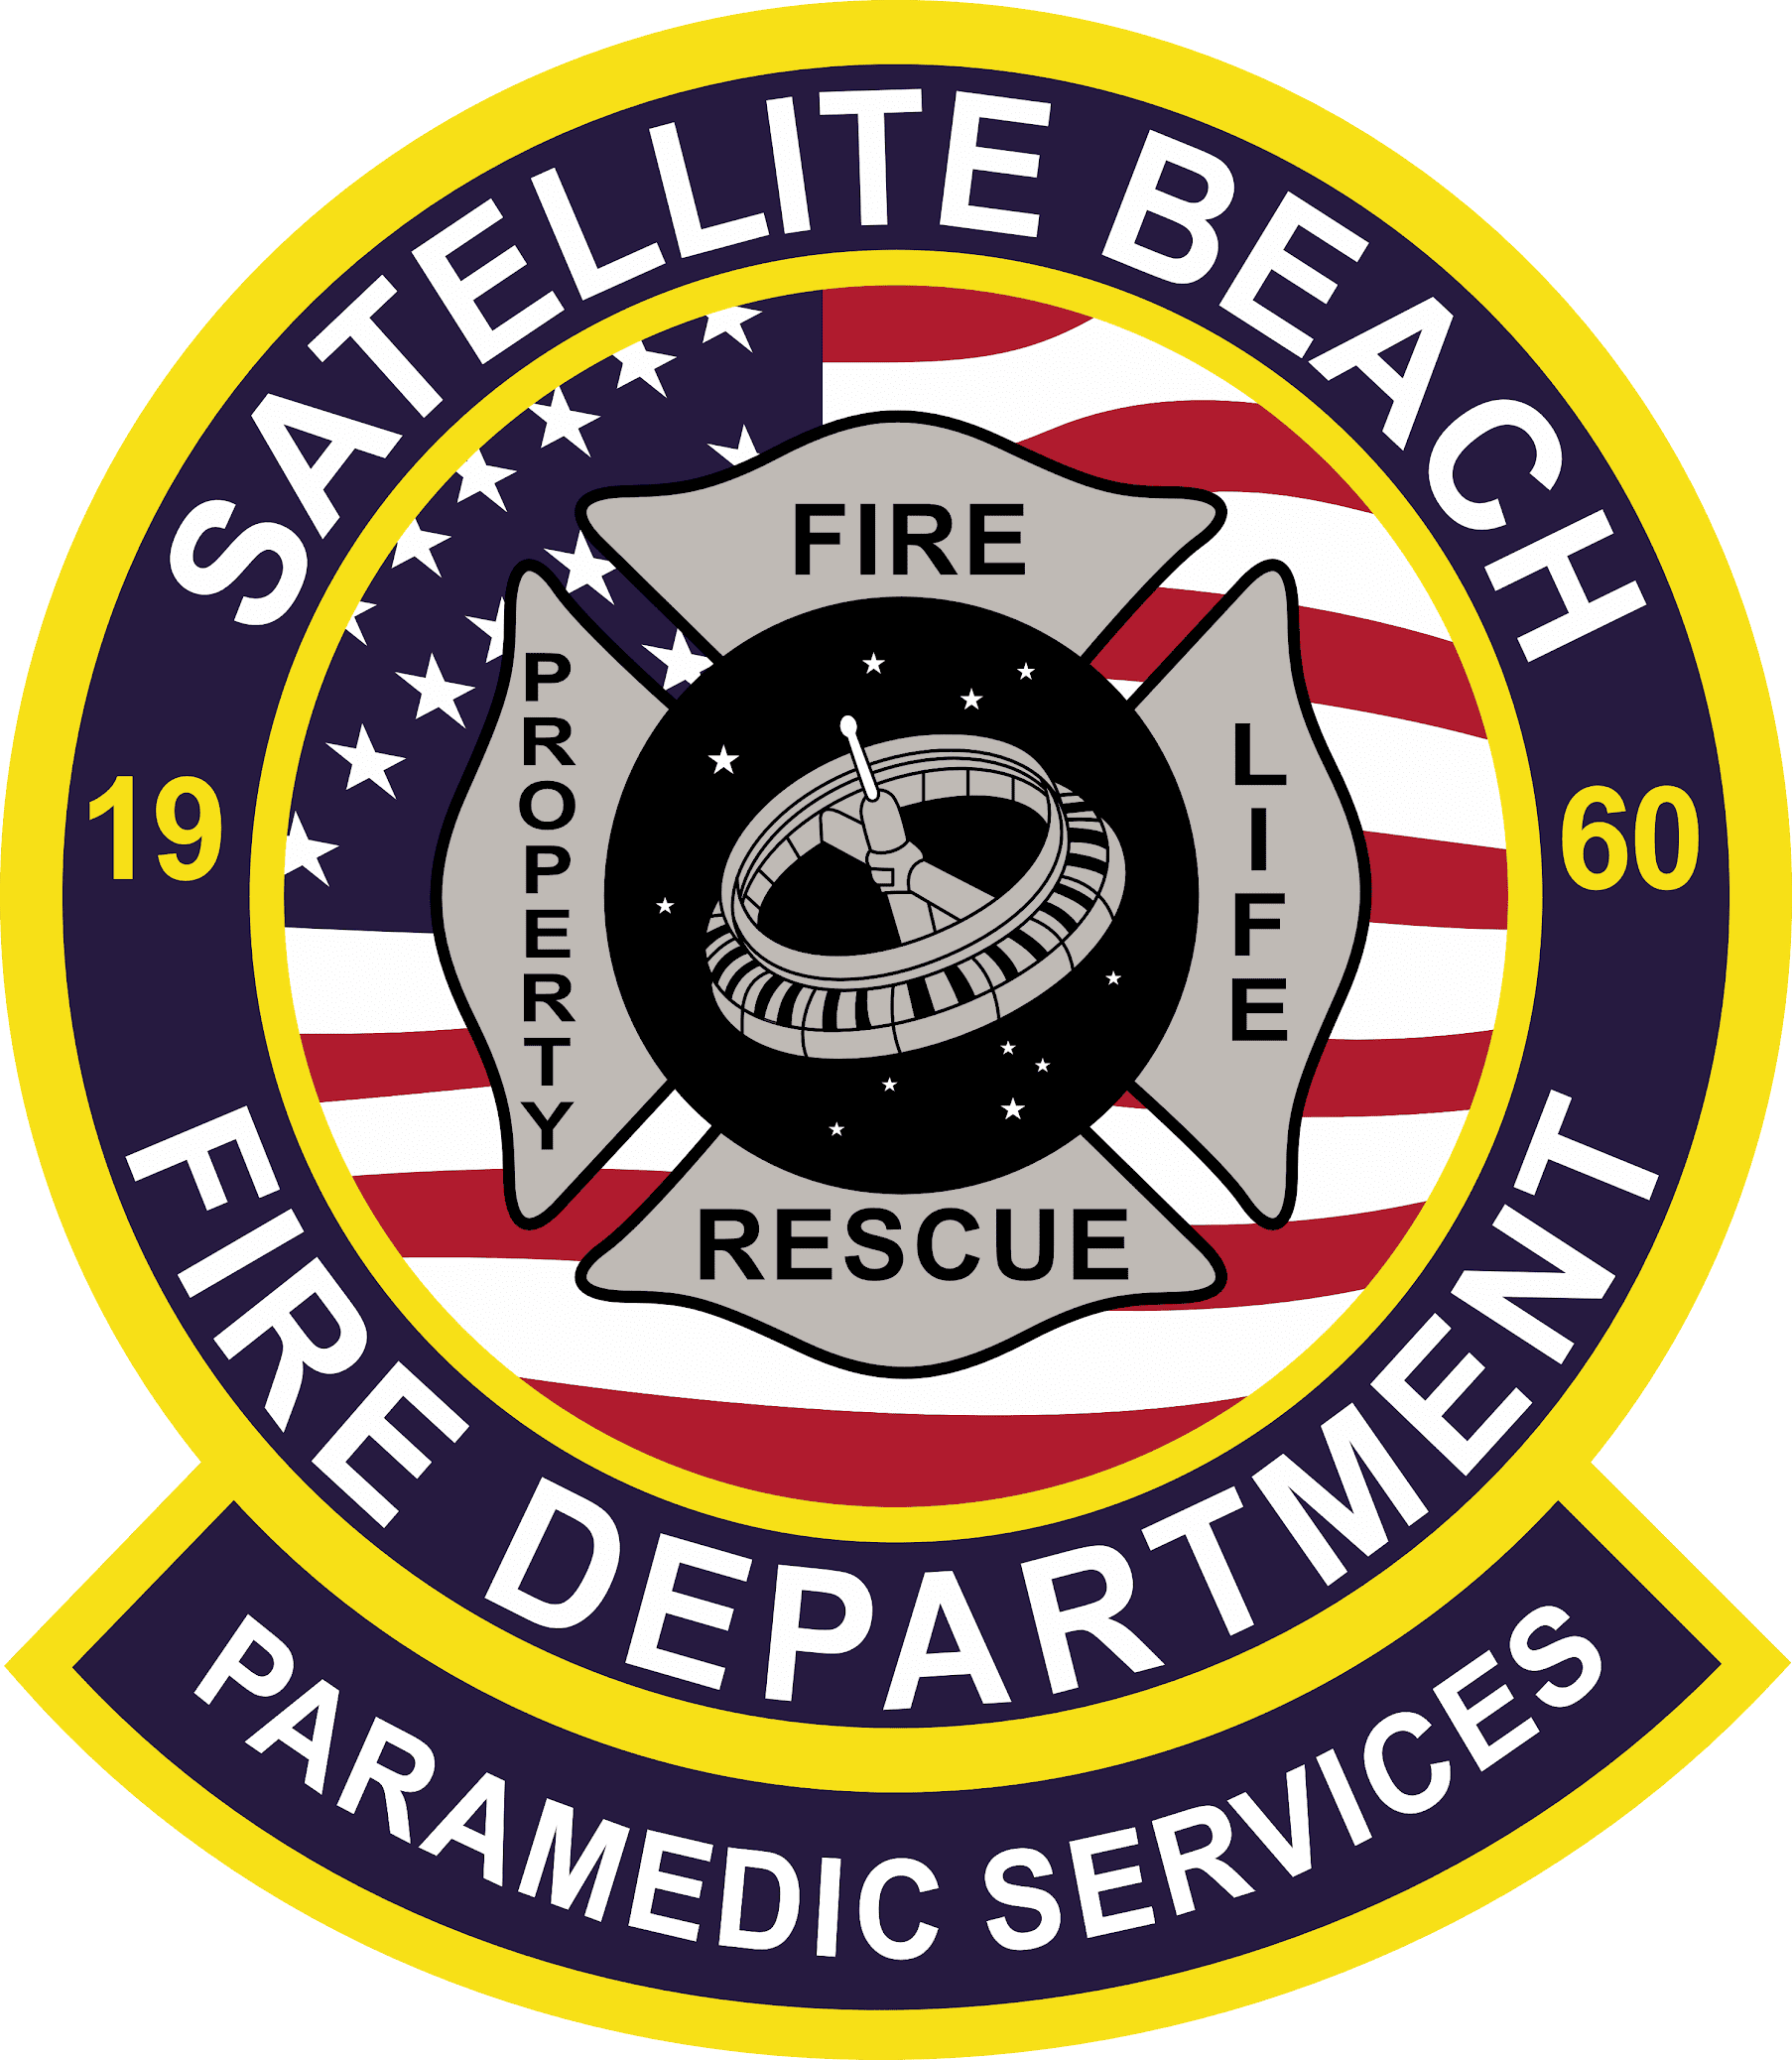 satellite beach fire department